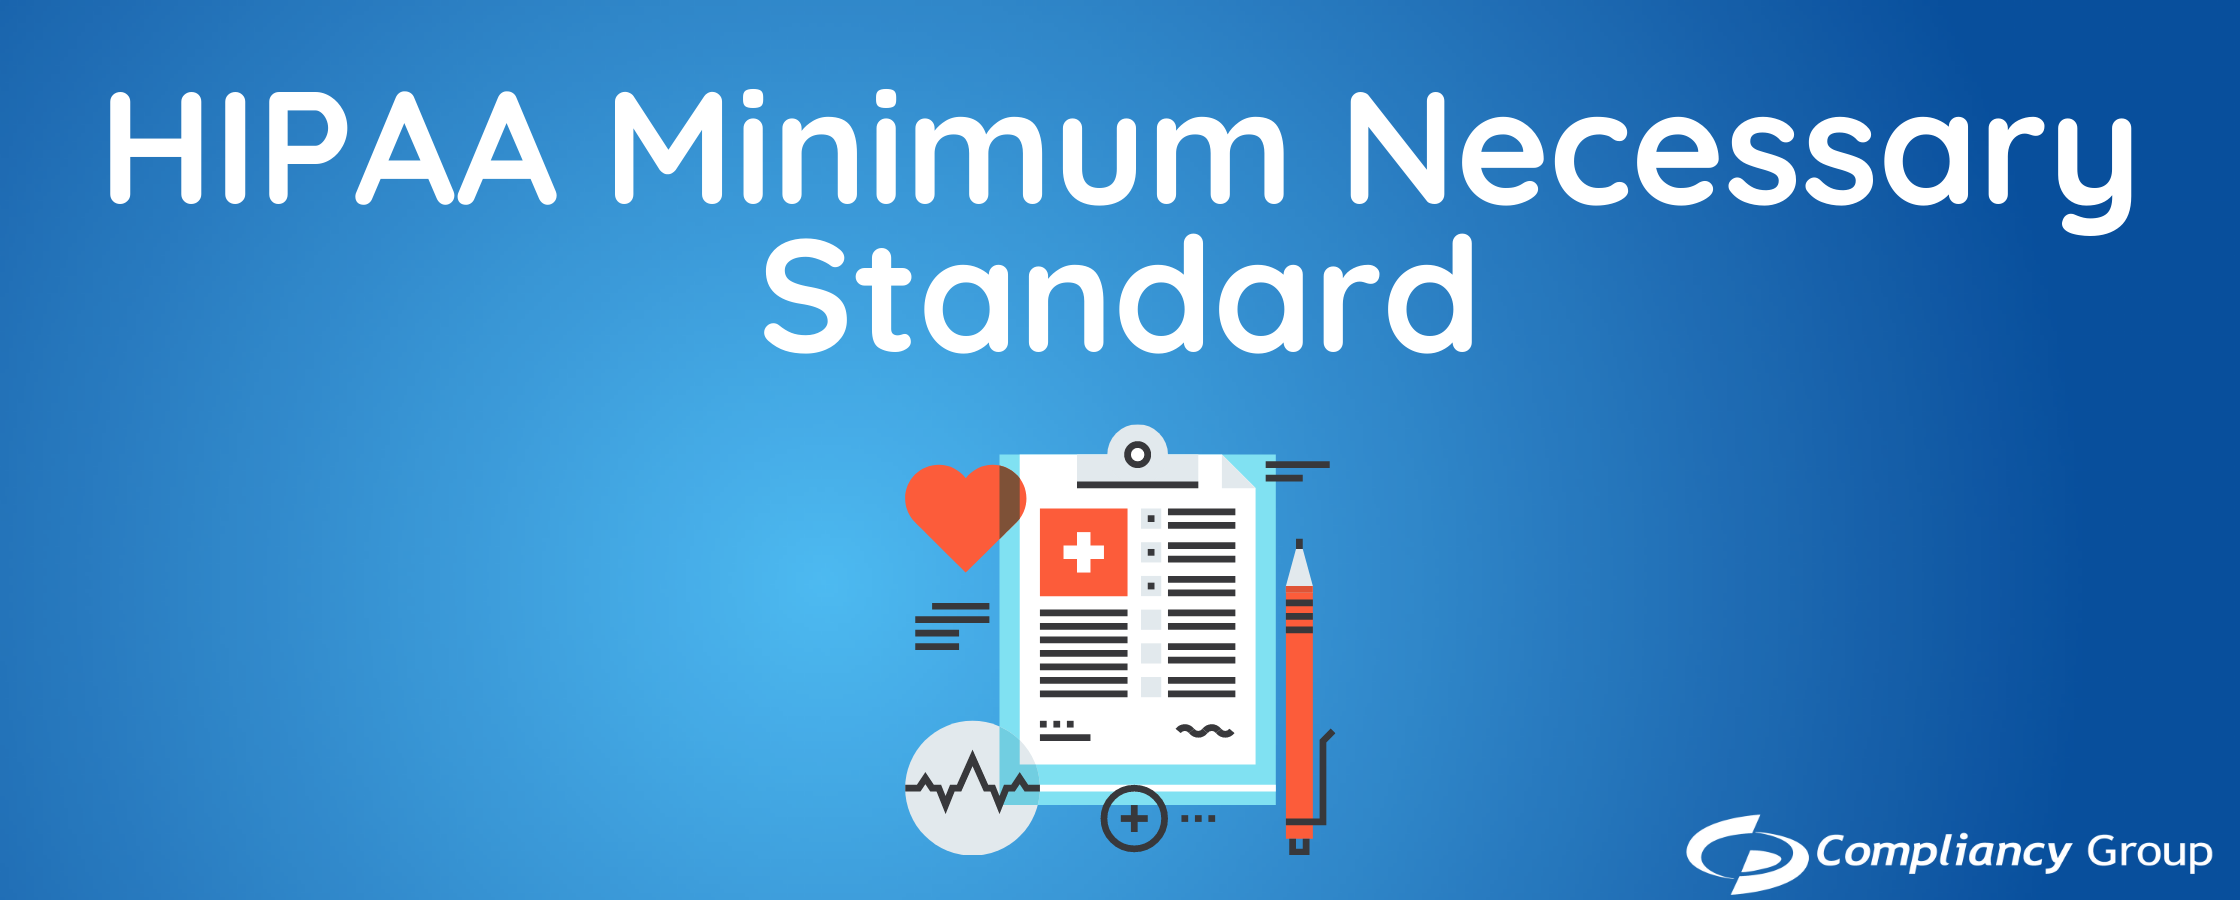 HIPAA Minimum Necessary Standard